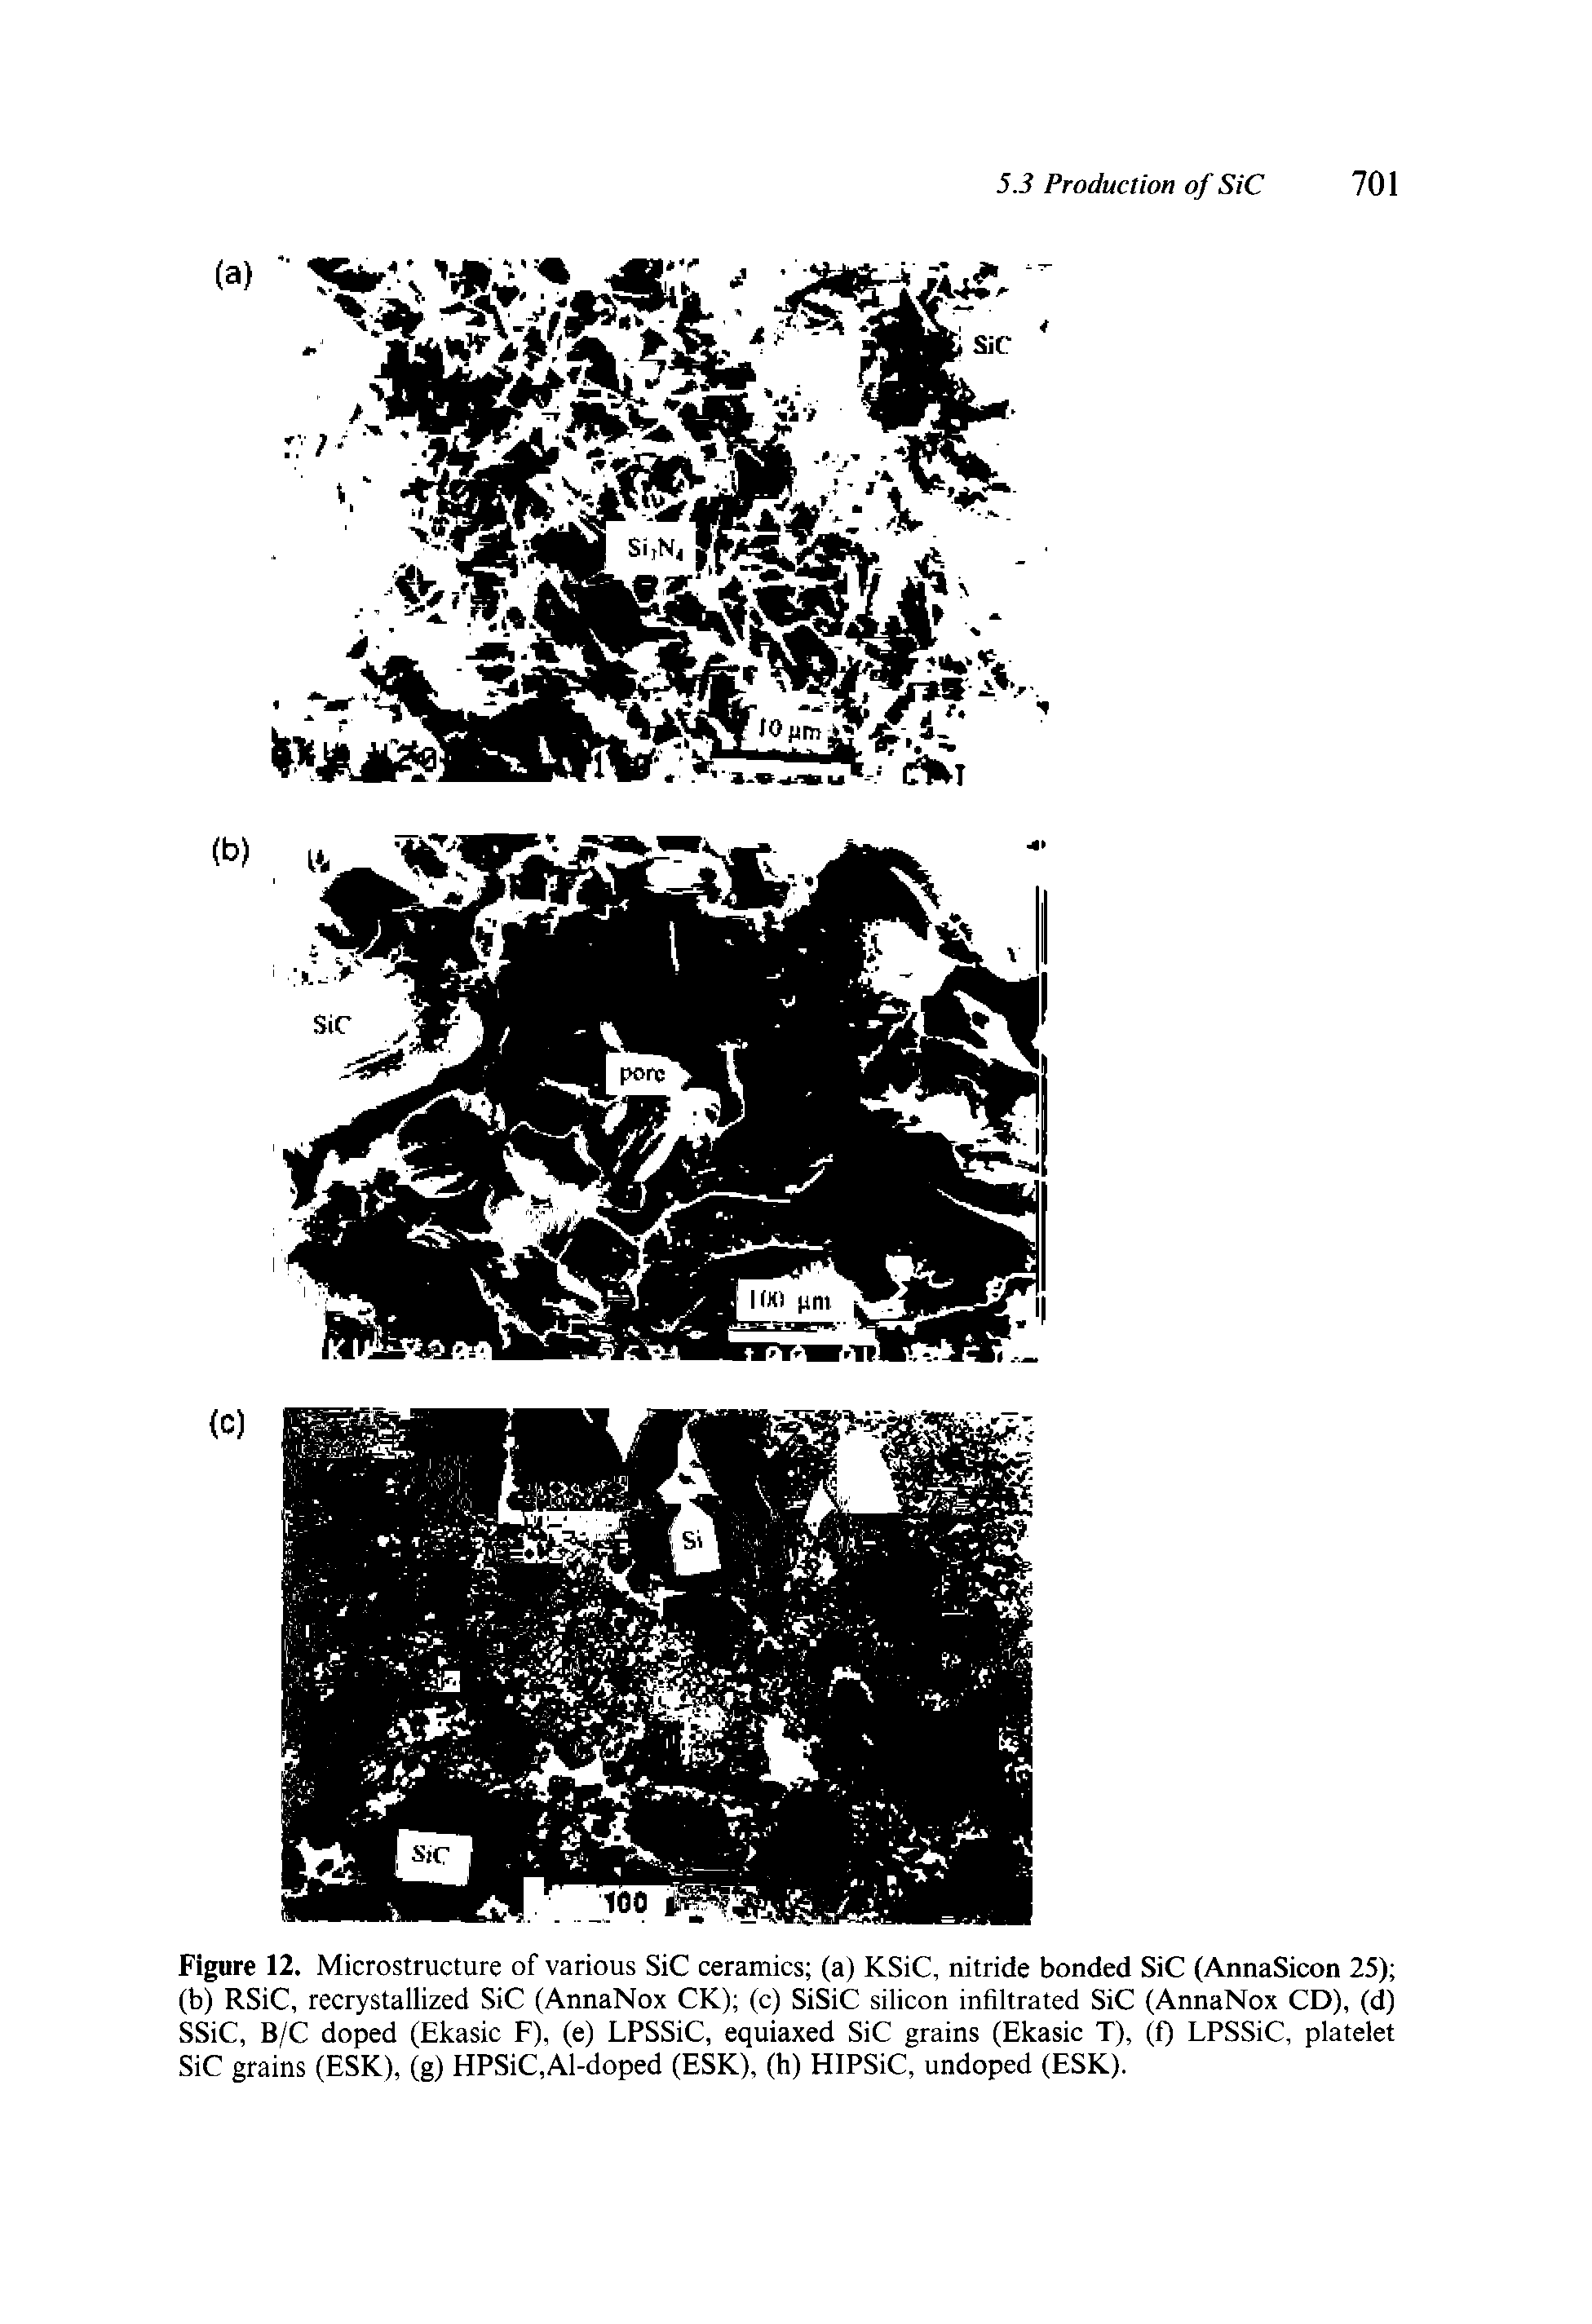 Figure 12. Microstructure of various SiC ceramics (a) KSiC, nitride bonded SiC (AnnaSicon 25) (b) RSiC, recrystallized SiC (AnnaNox CK) (c) SiSiC silicon infiltrated SiC (AnnaNox CD), (d) SSiC, B/C doped (Ekasic F), (e) LPSSiC, equiaxed SiC grains (Ekasic T), (f) LPSSiC, platelet SiC grains (ESK), (g) HPSiC,Al-doped (ESK), (h) HIPSiC, undoped (ESK).